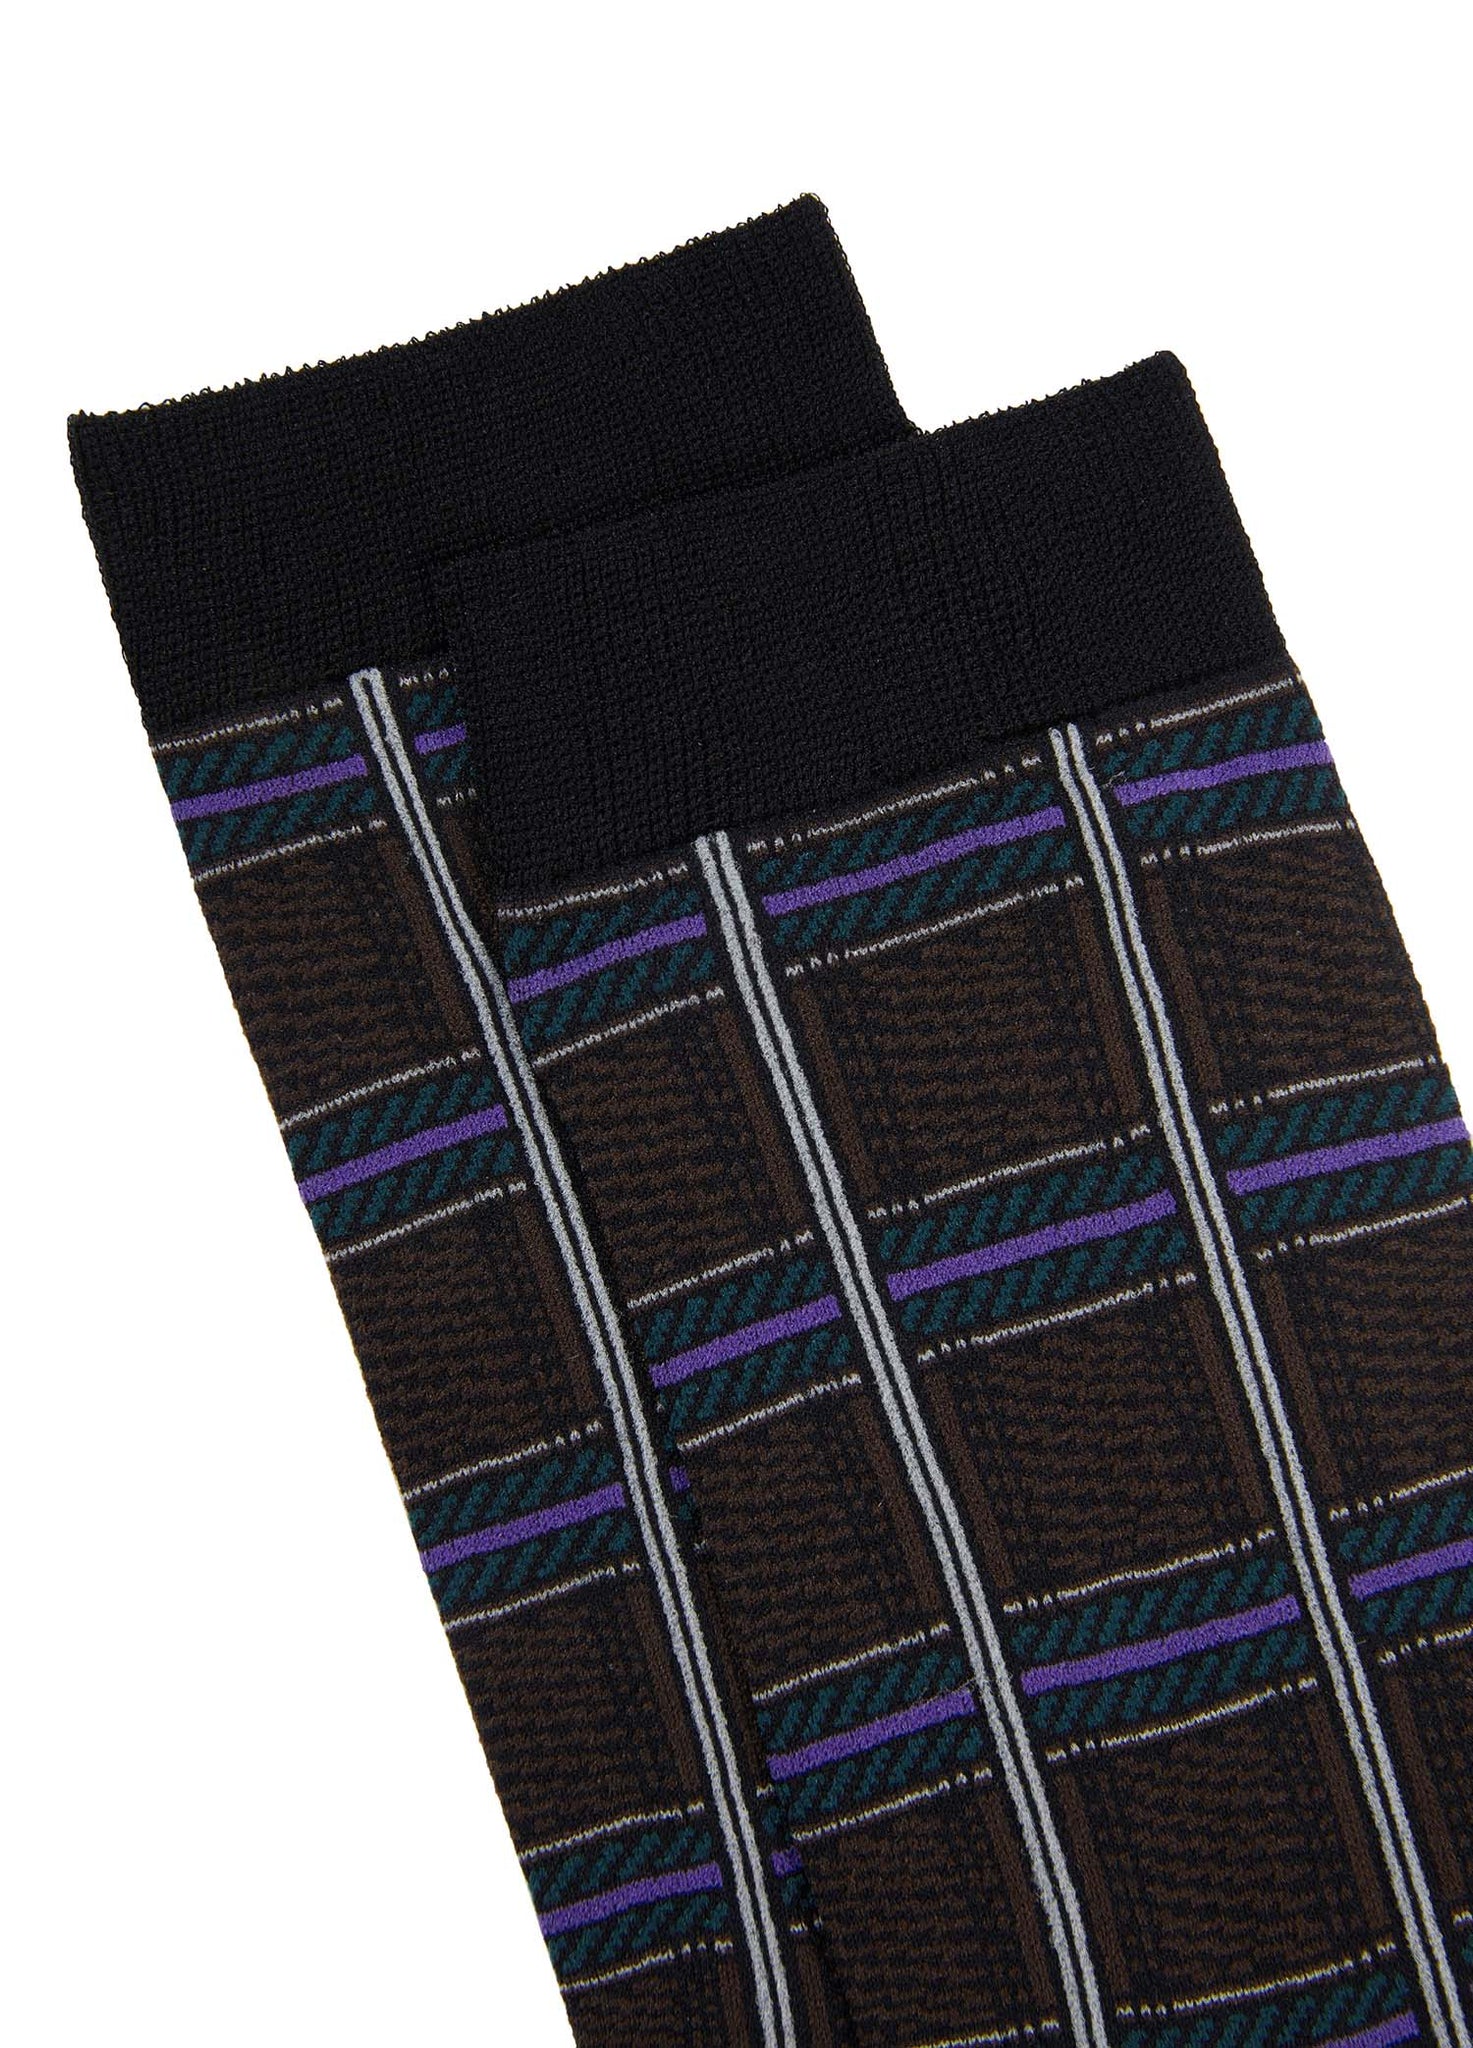 Socks / JNBY Medium Striped Socks